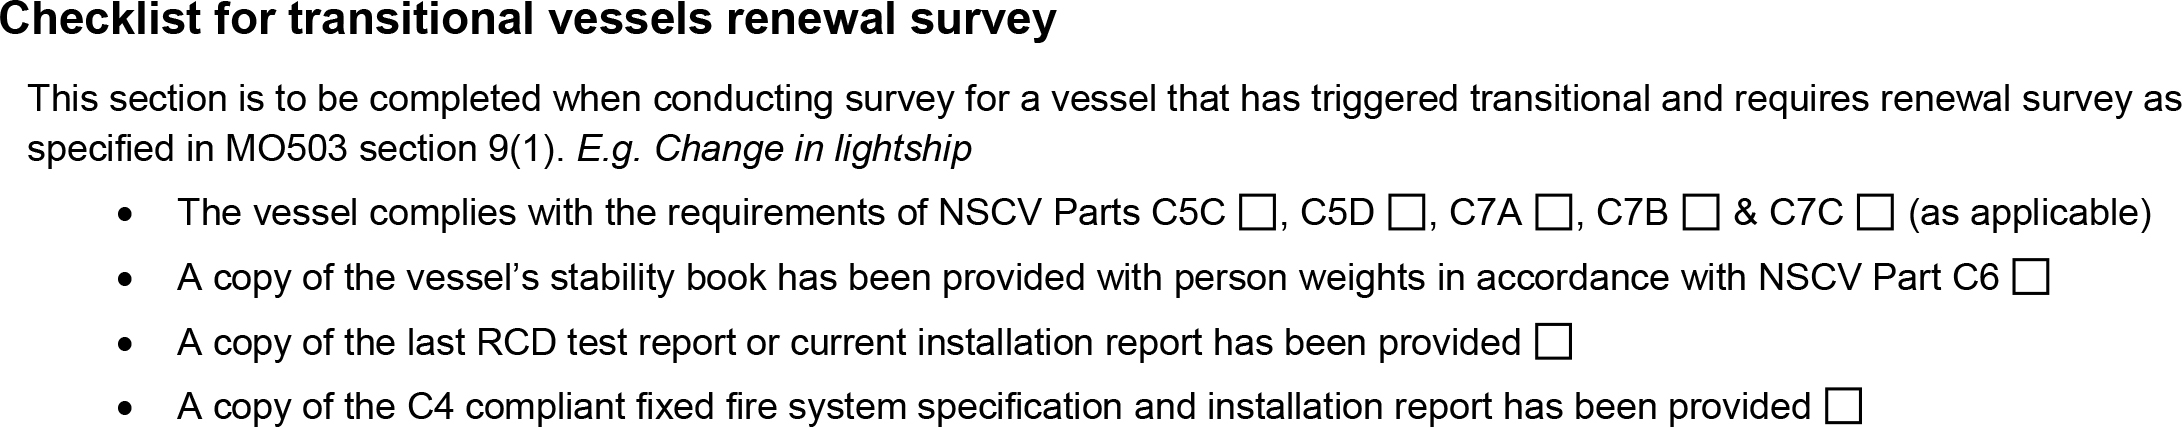 Checklist for transitional vessels renewal survey